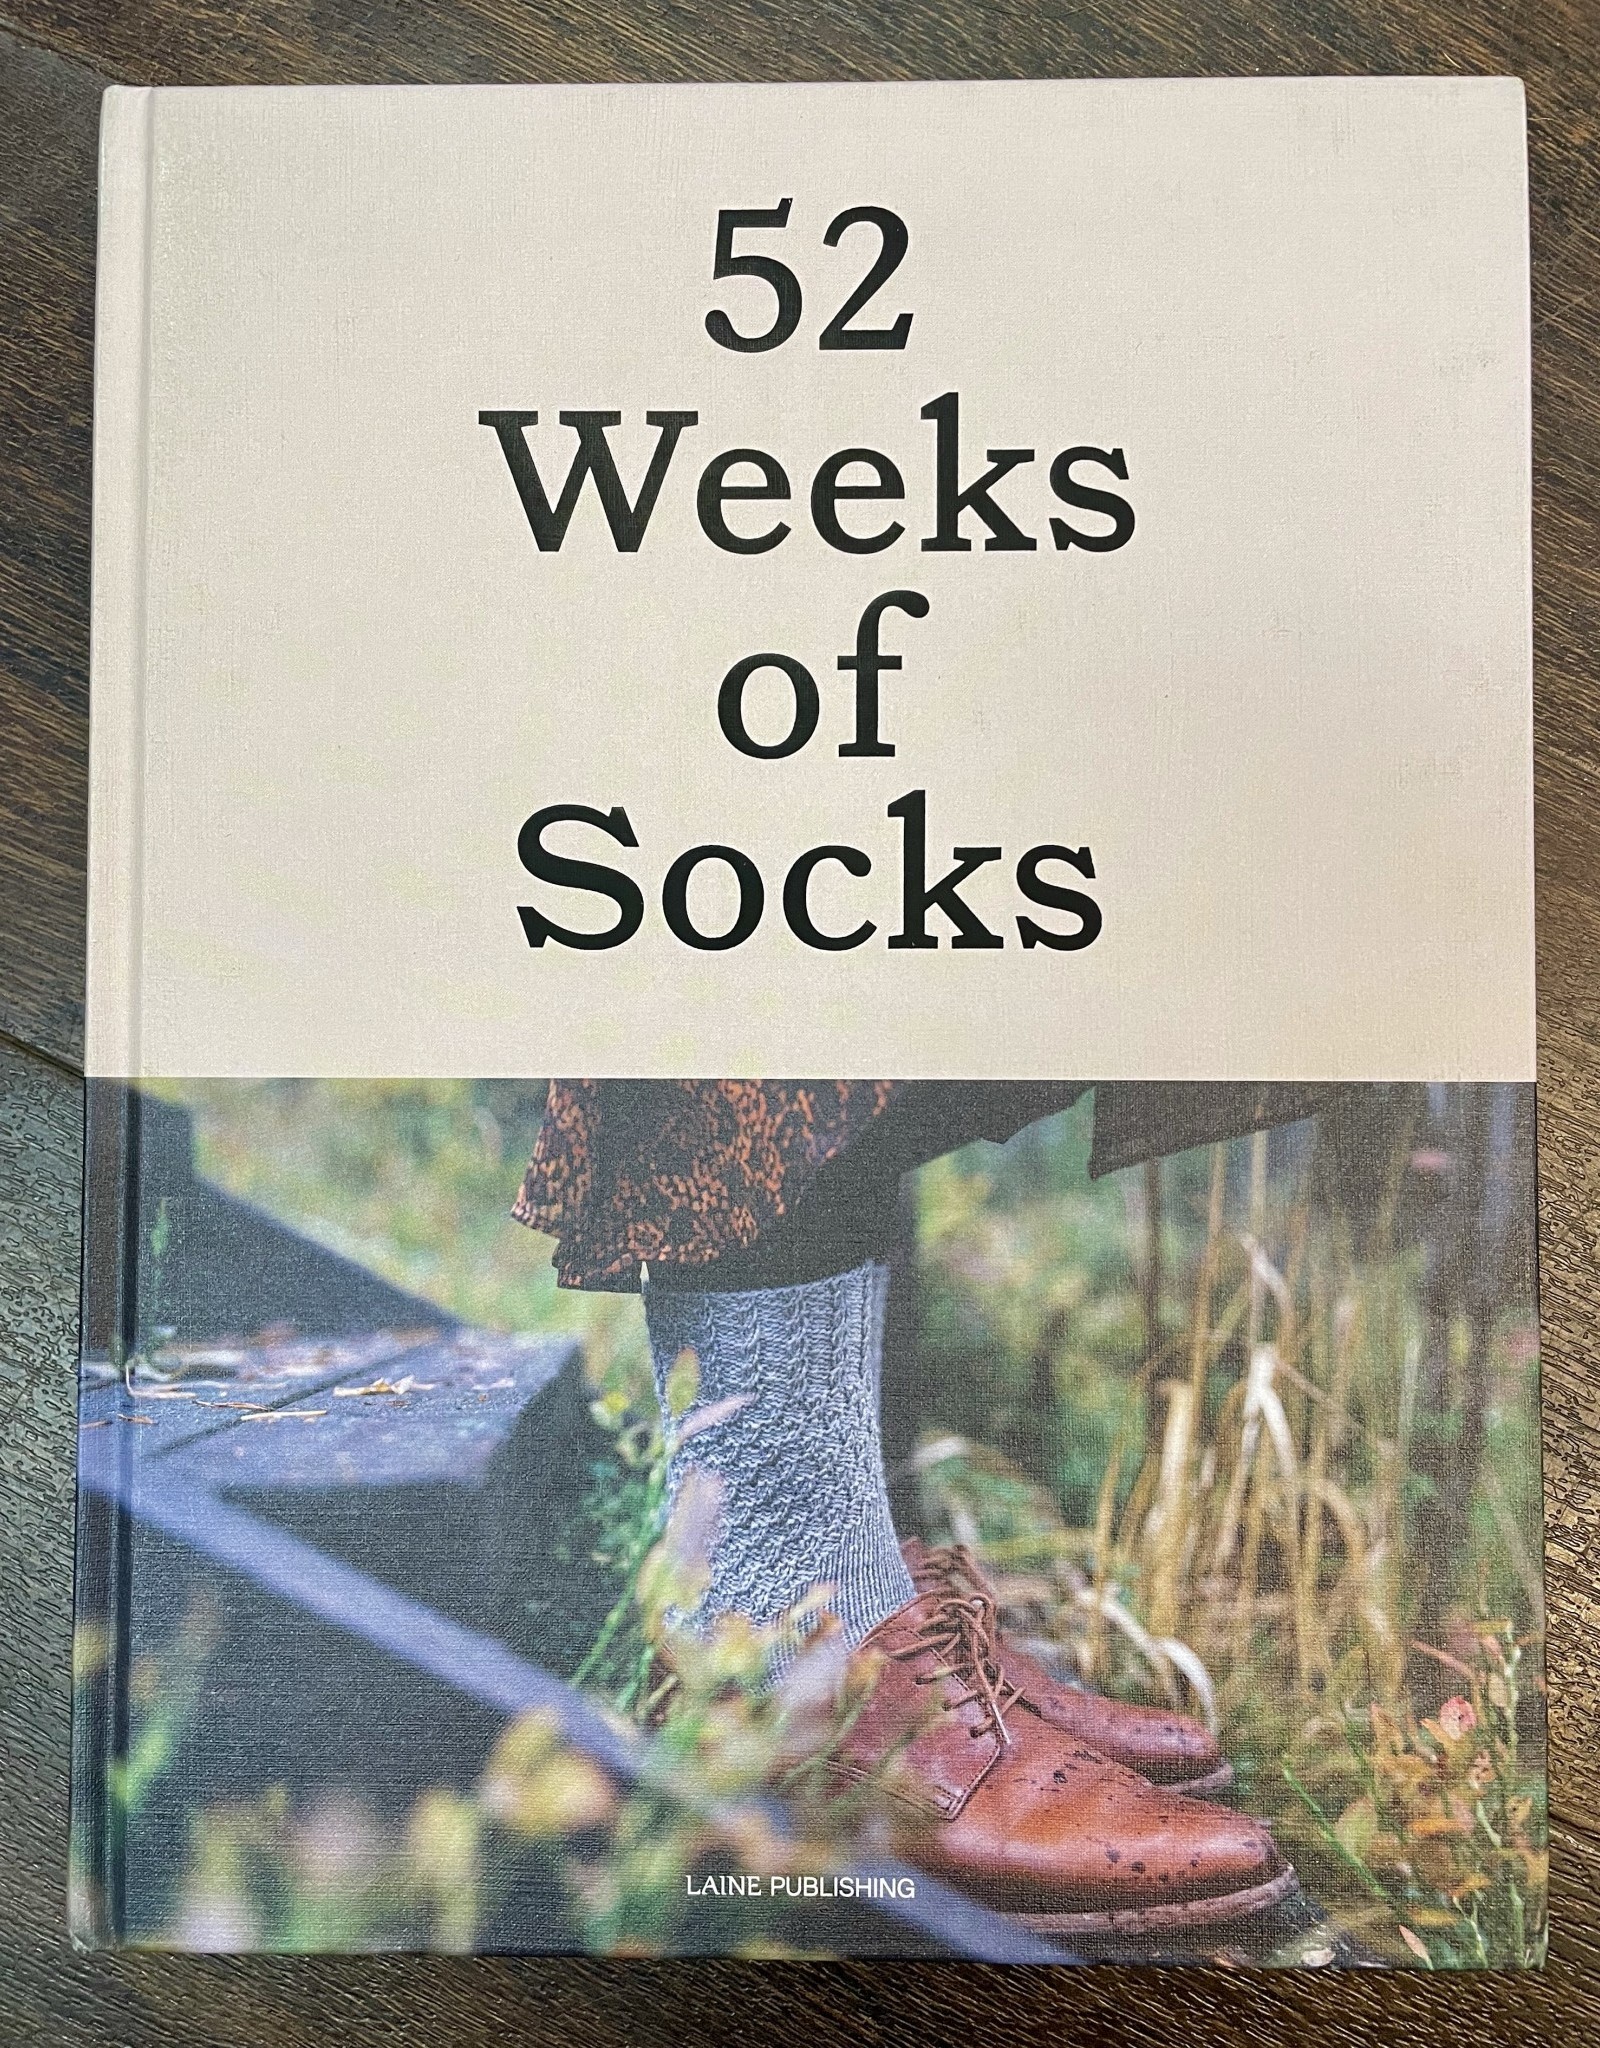 Laine 52 Weeks of Socks by Laine